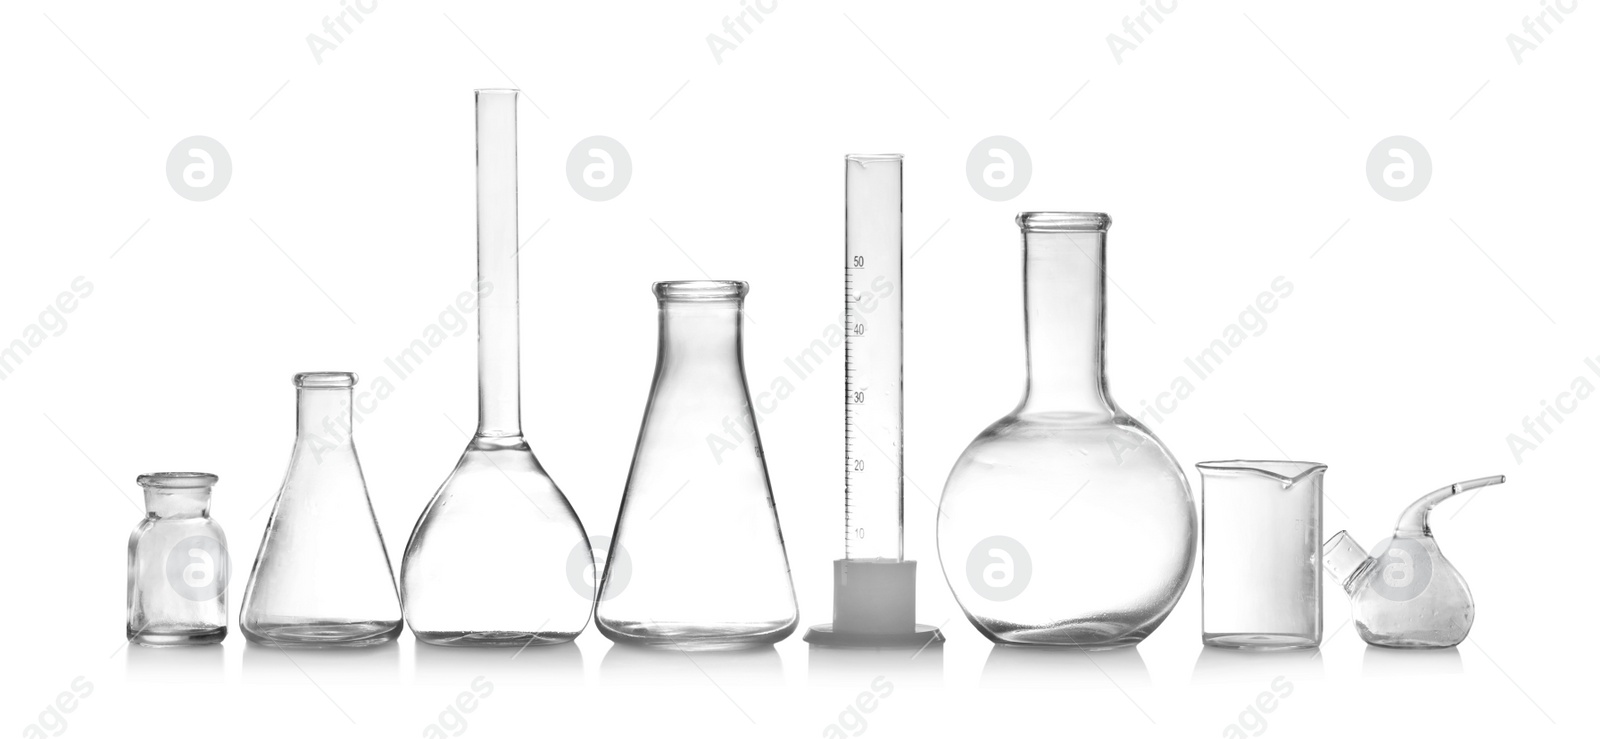 Photo of Laboratory glassware isolated on white. Chemical analysis